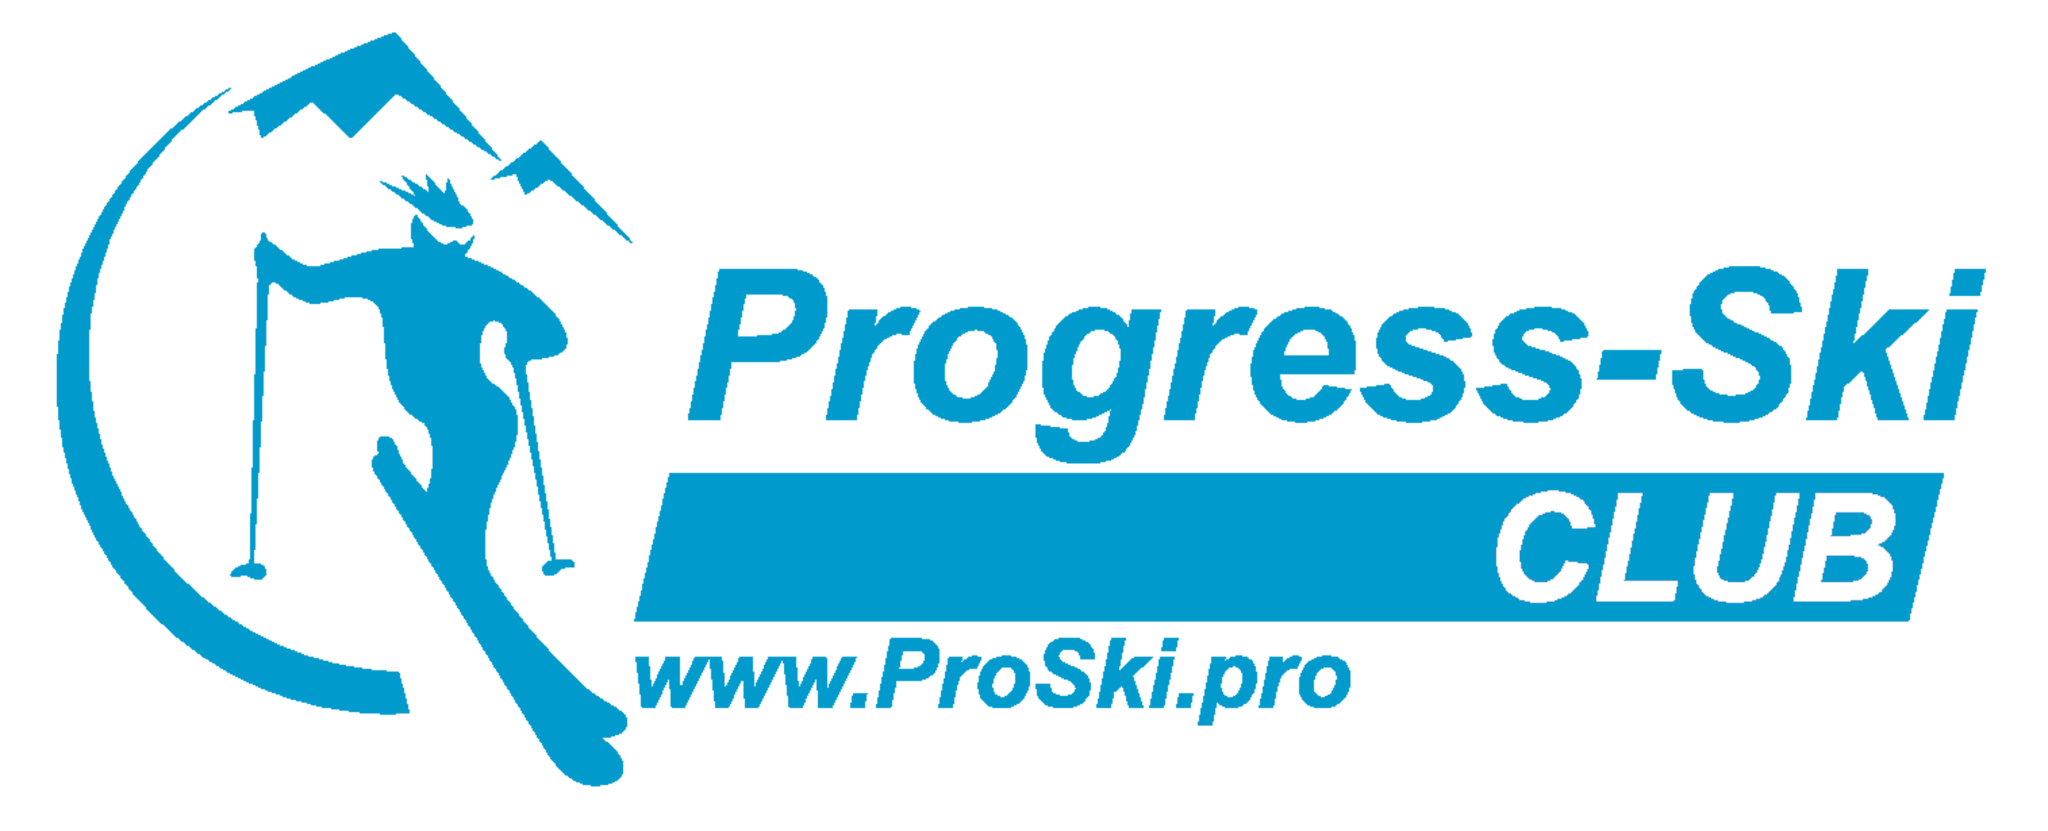 Логотип Прогресс-Ски клуба